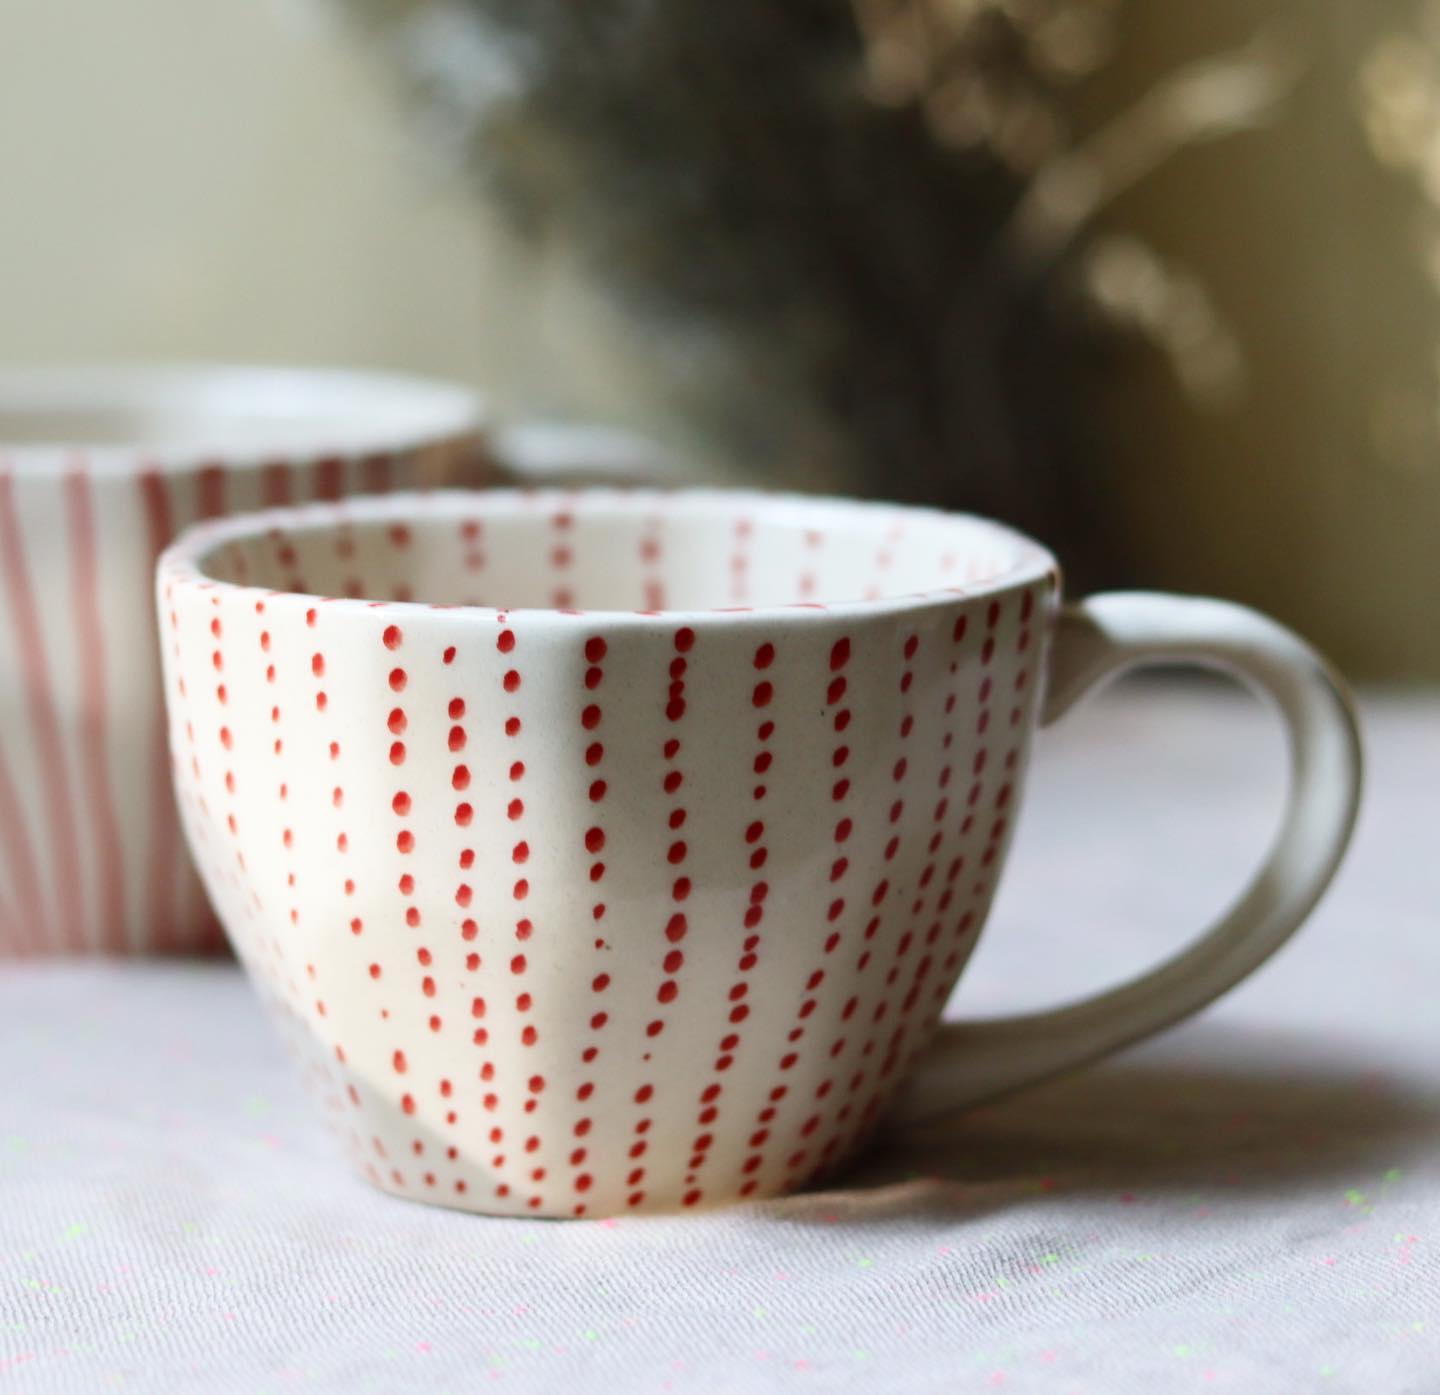 The polka coffee mugs red & white